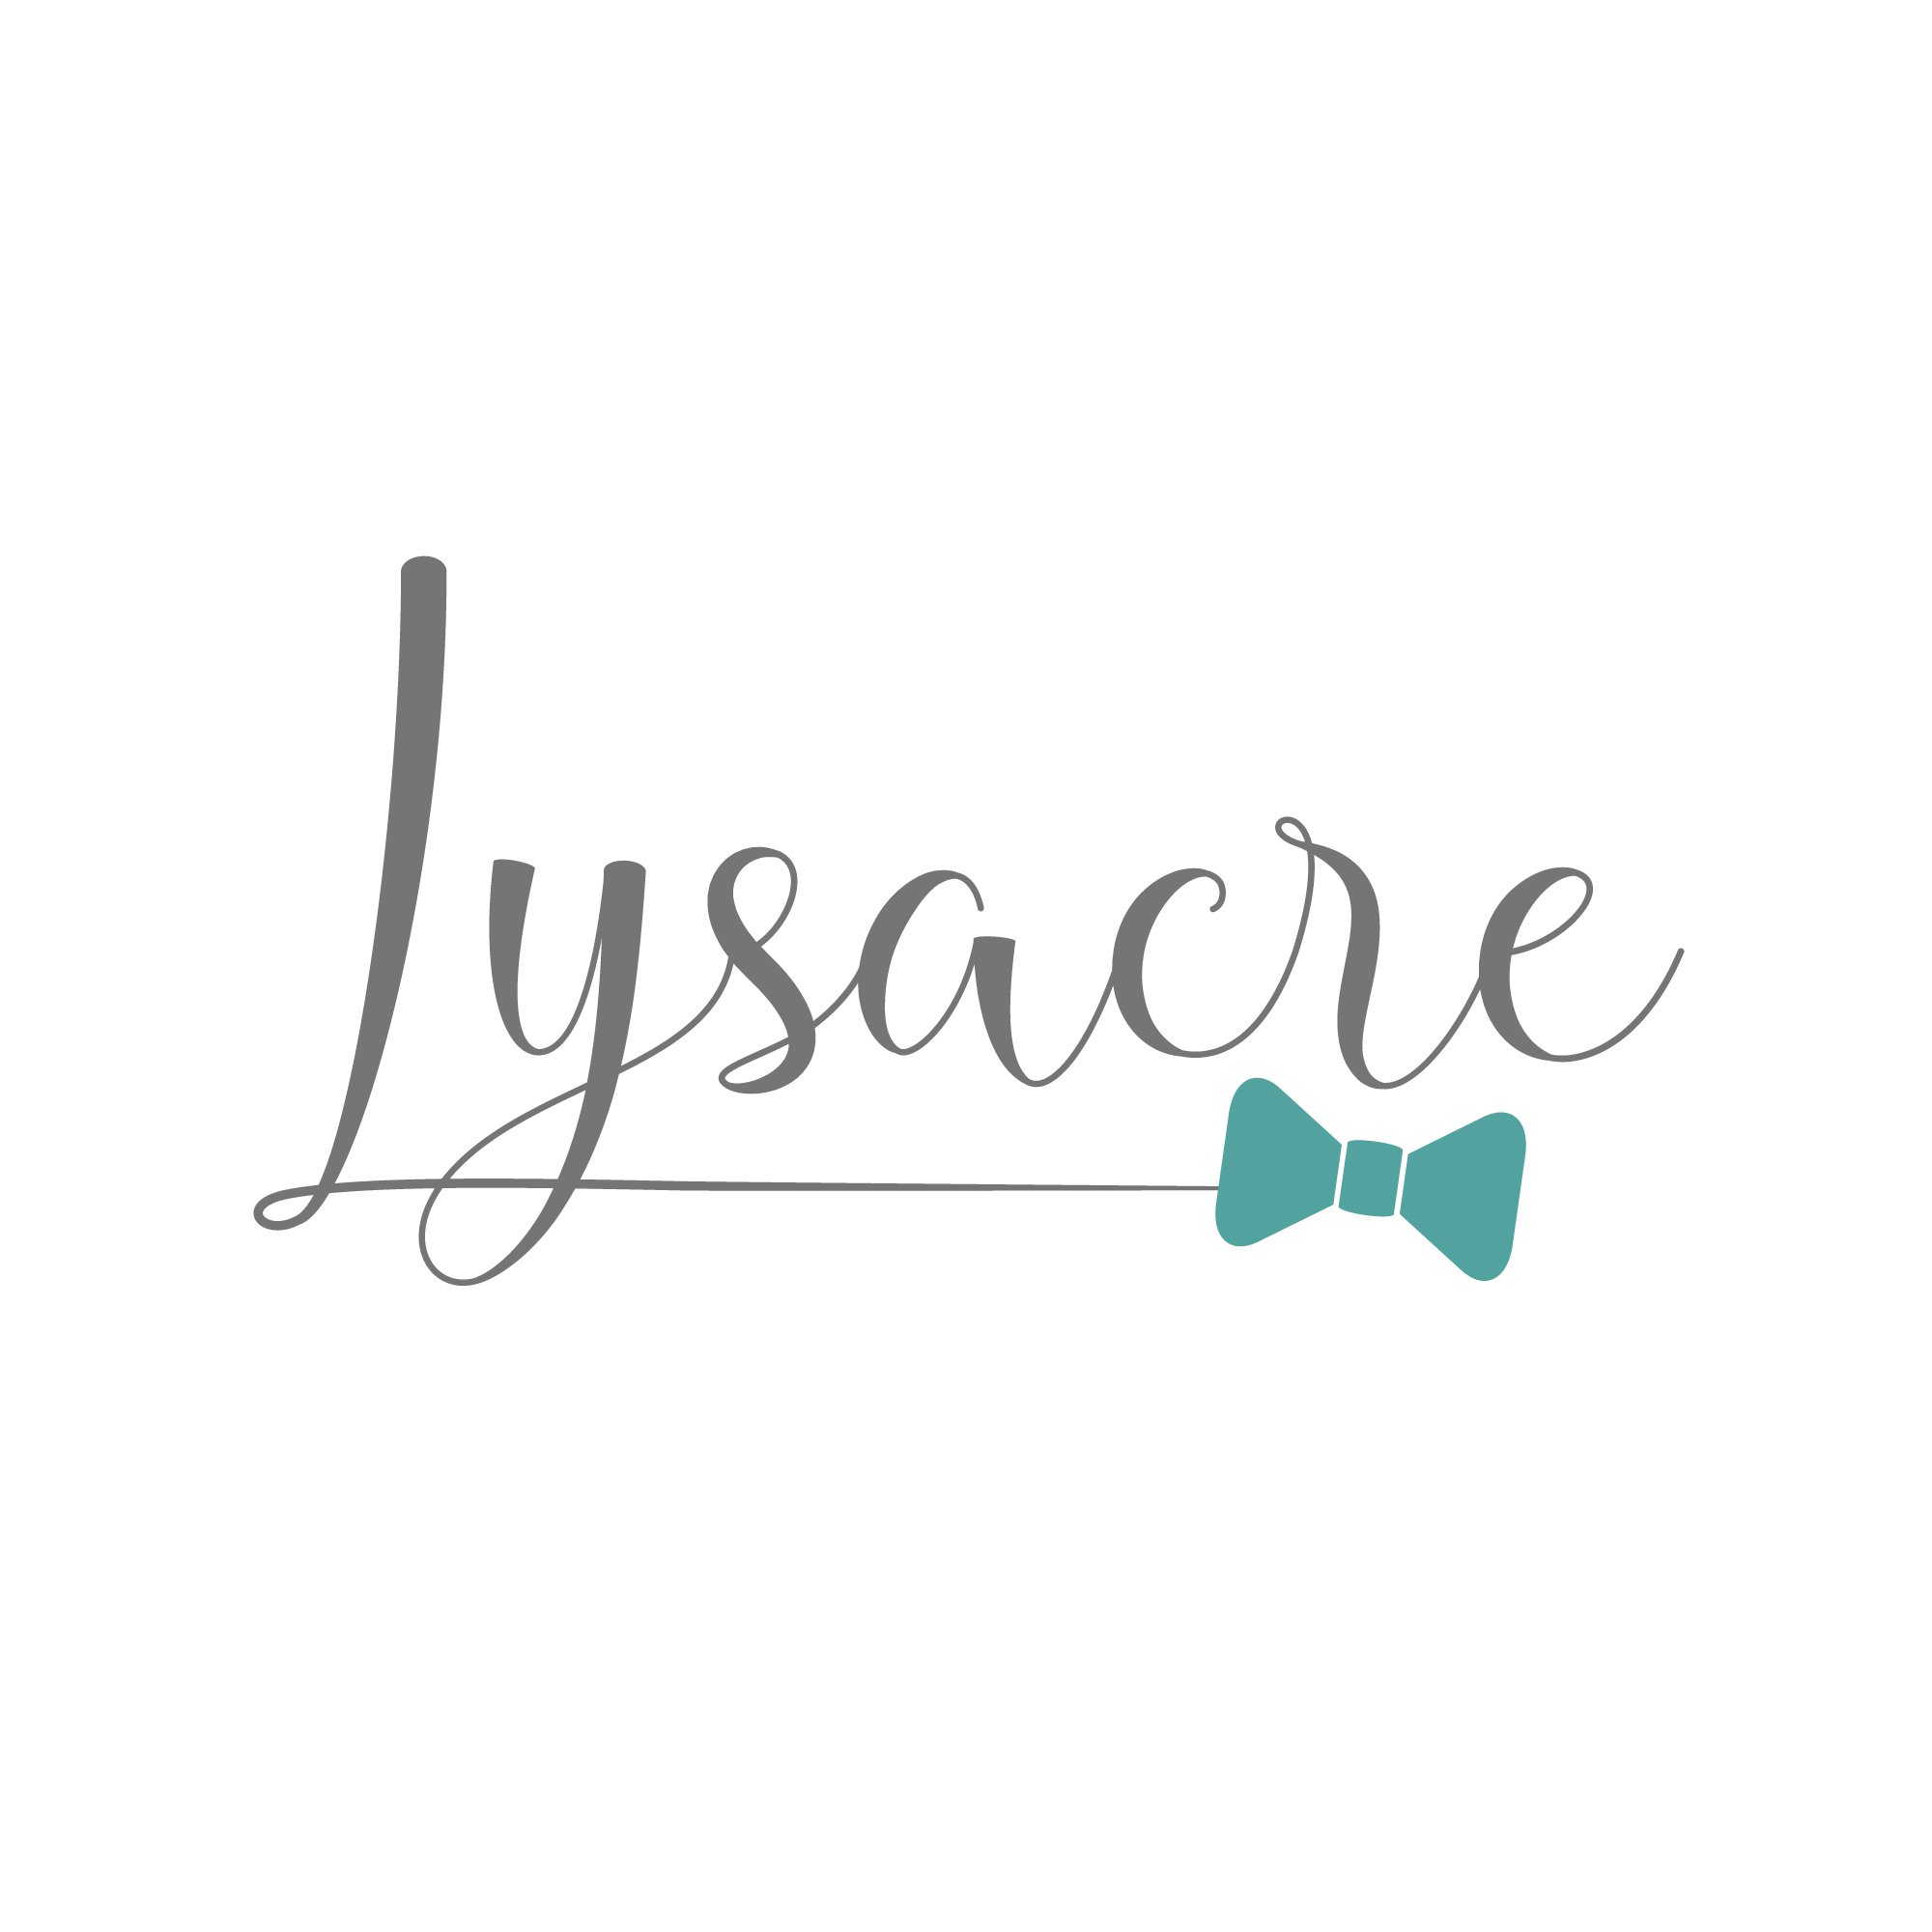 Lysacre